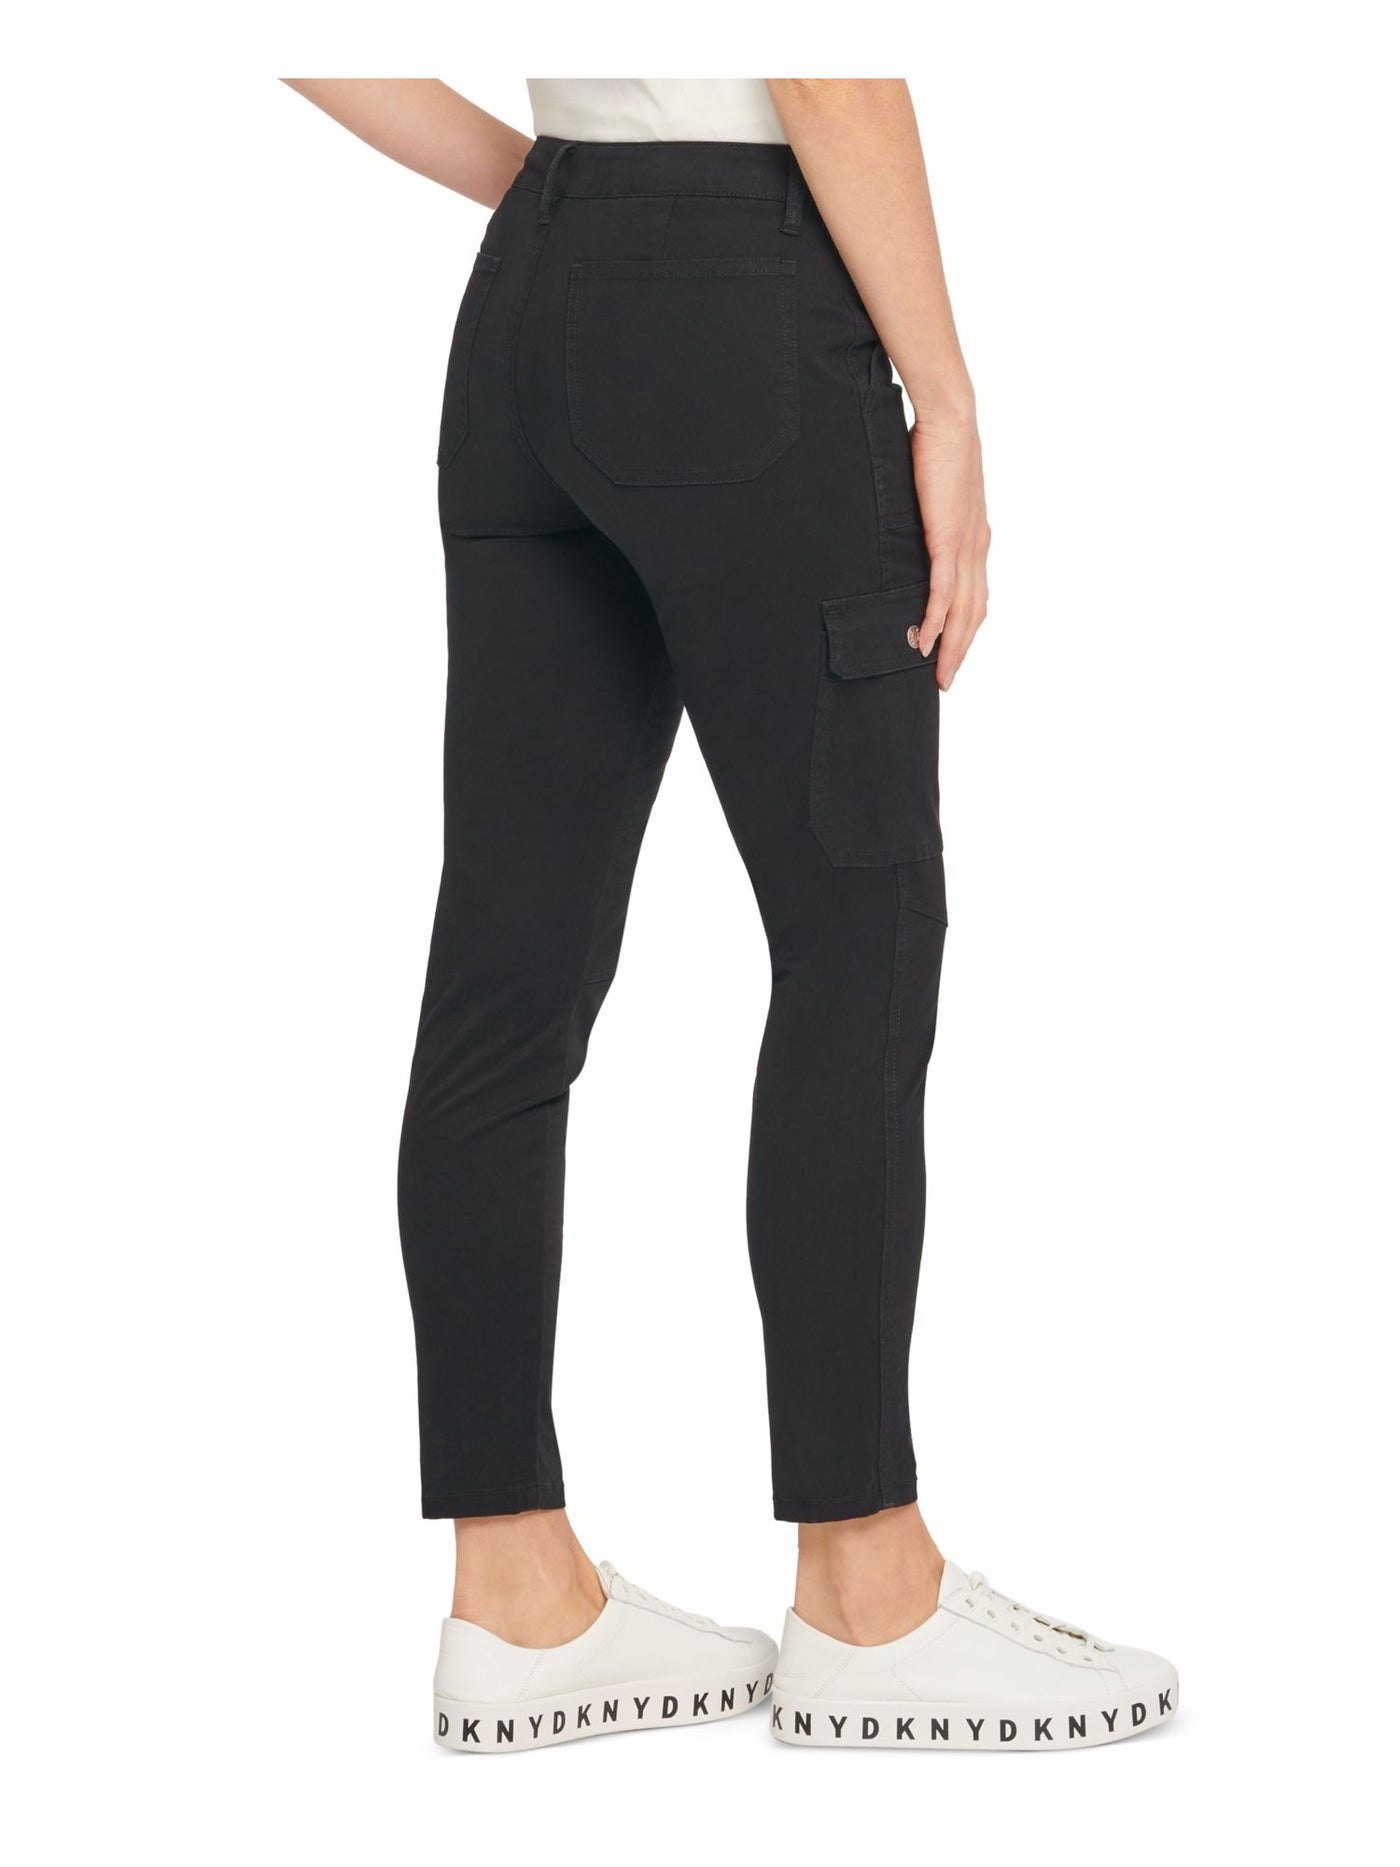 DKNY Womens Black Zippered Pocketed Skinny Pants 24